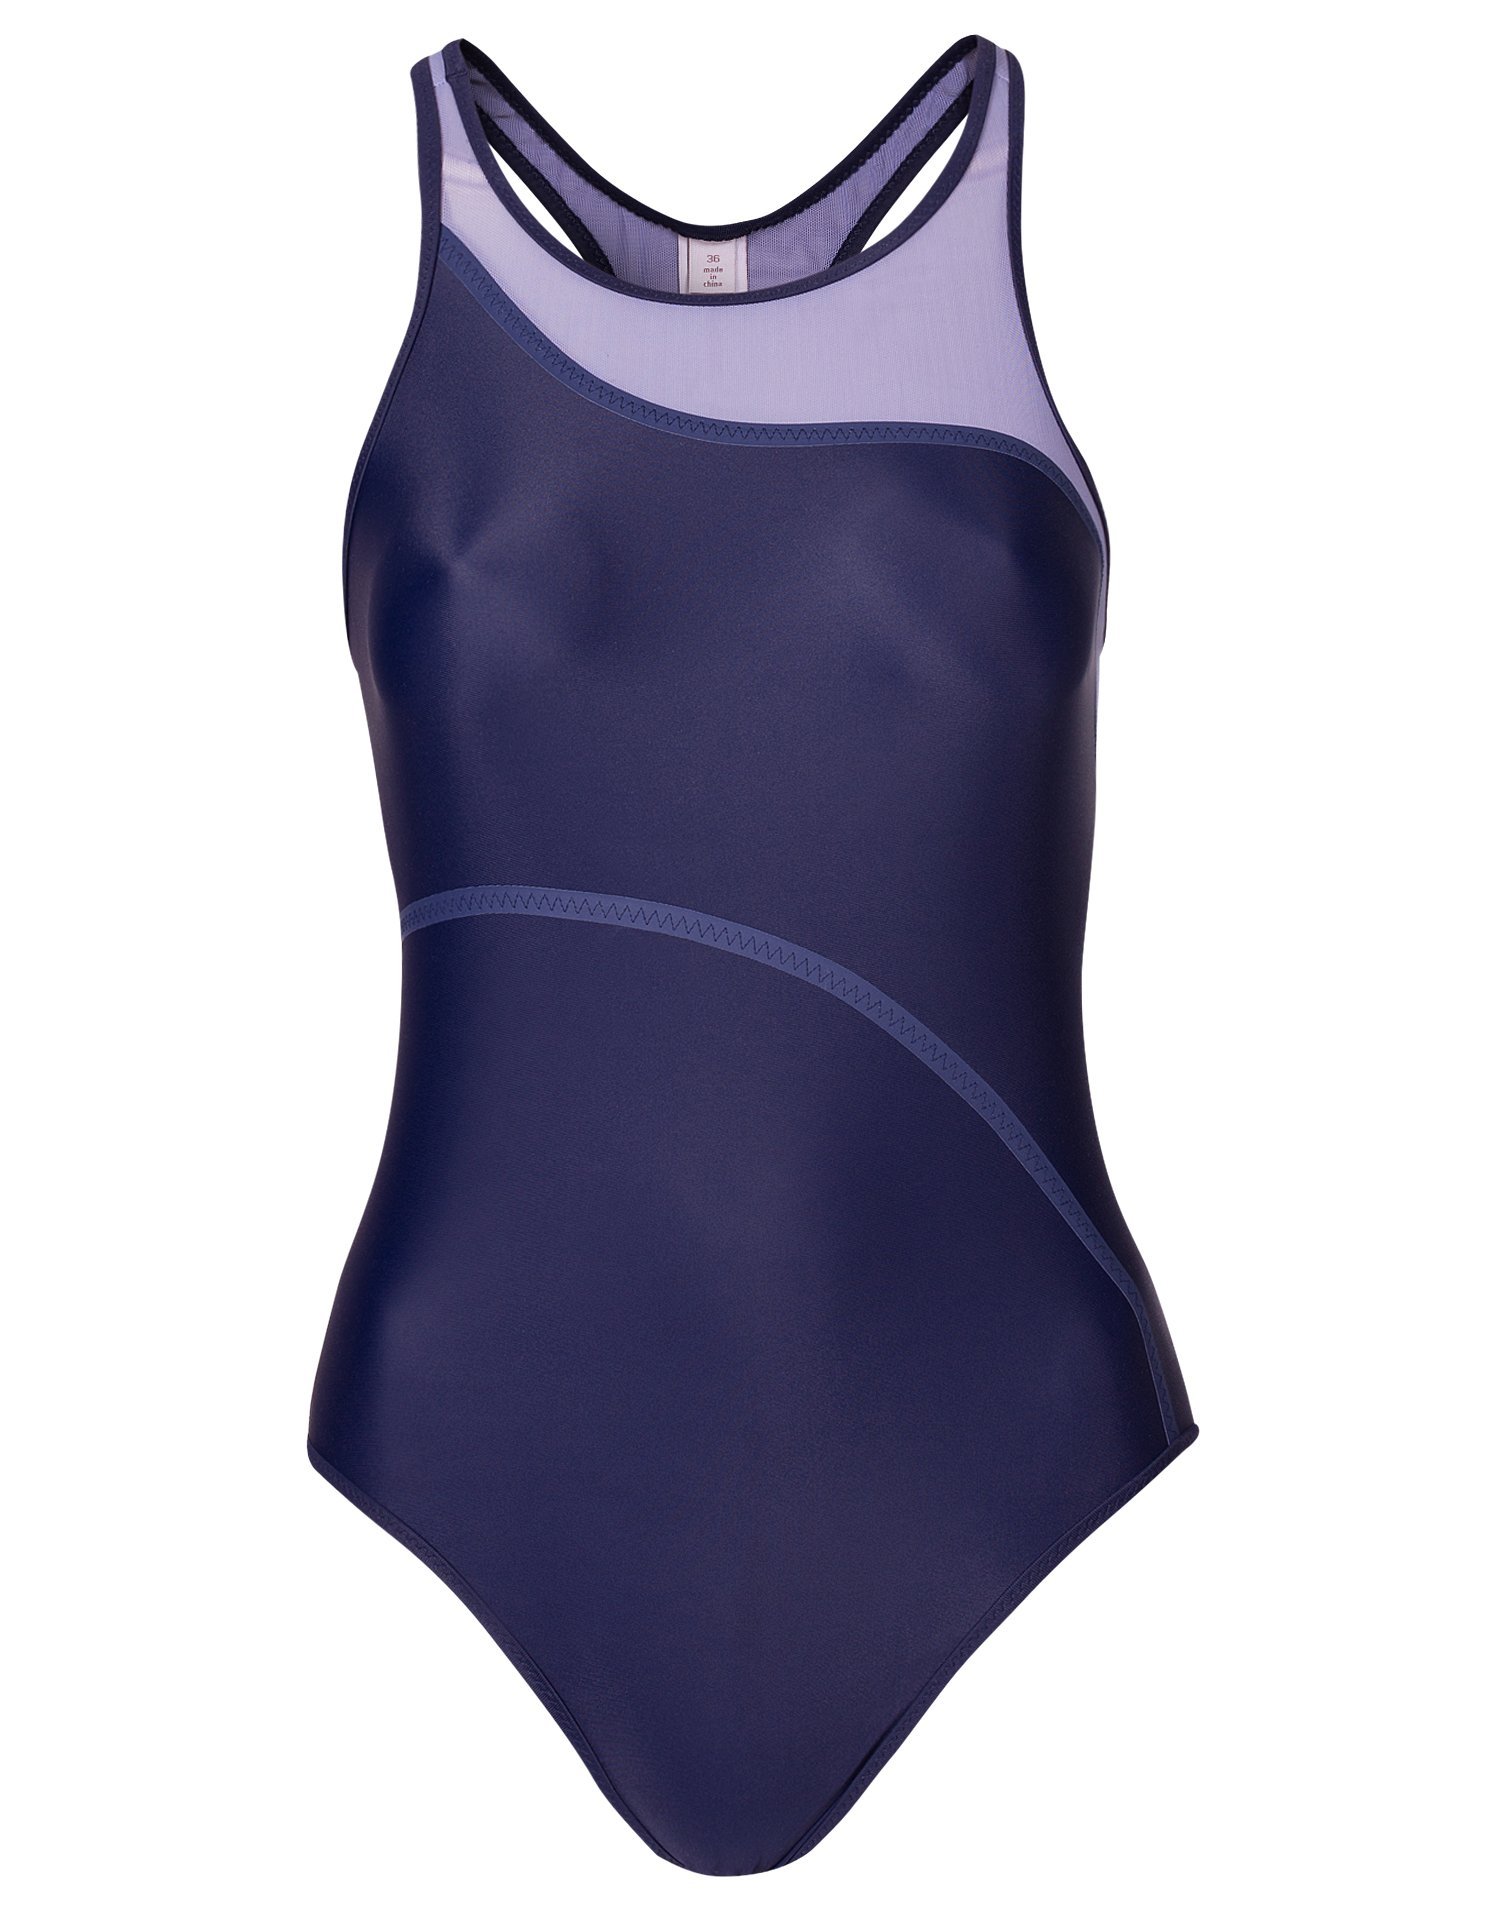 Train Swimsuit - Adidas By Stella Mccartney - Blue/Purple - Swimsuits ...